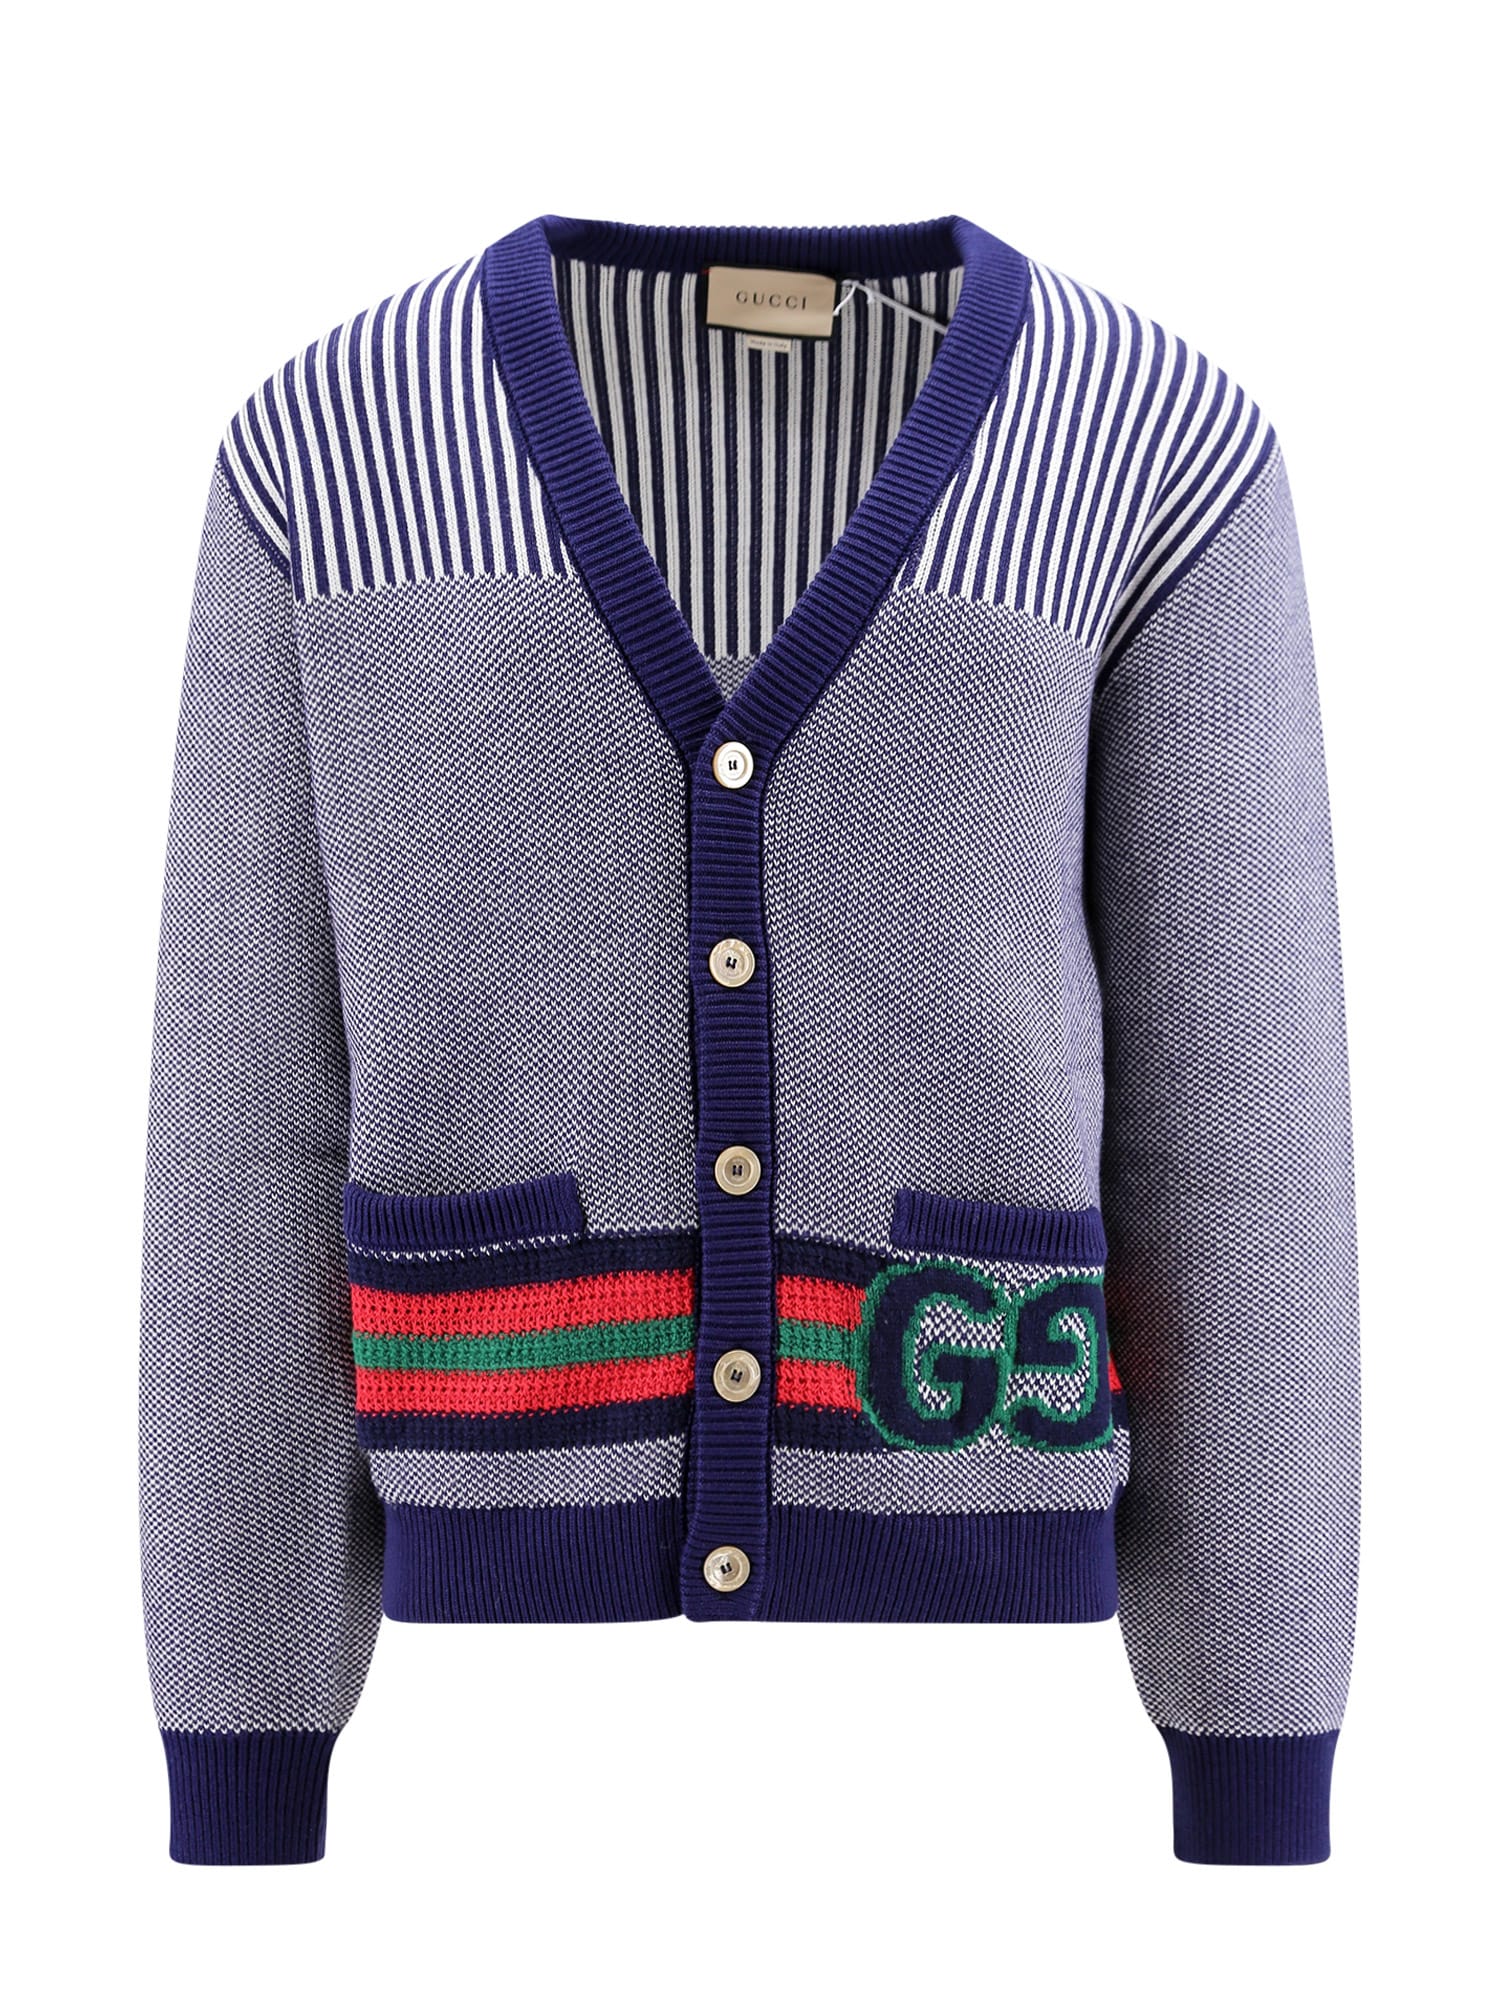 Gucci Monogram Motif Sweater in Blue for Men